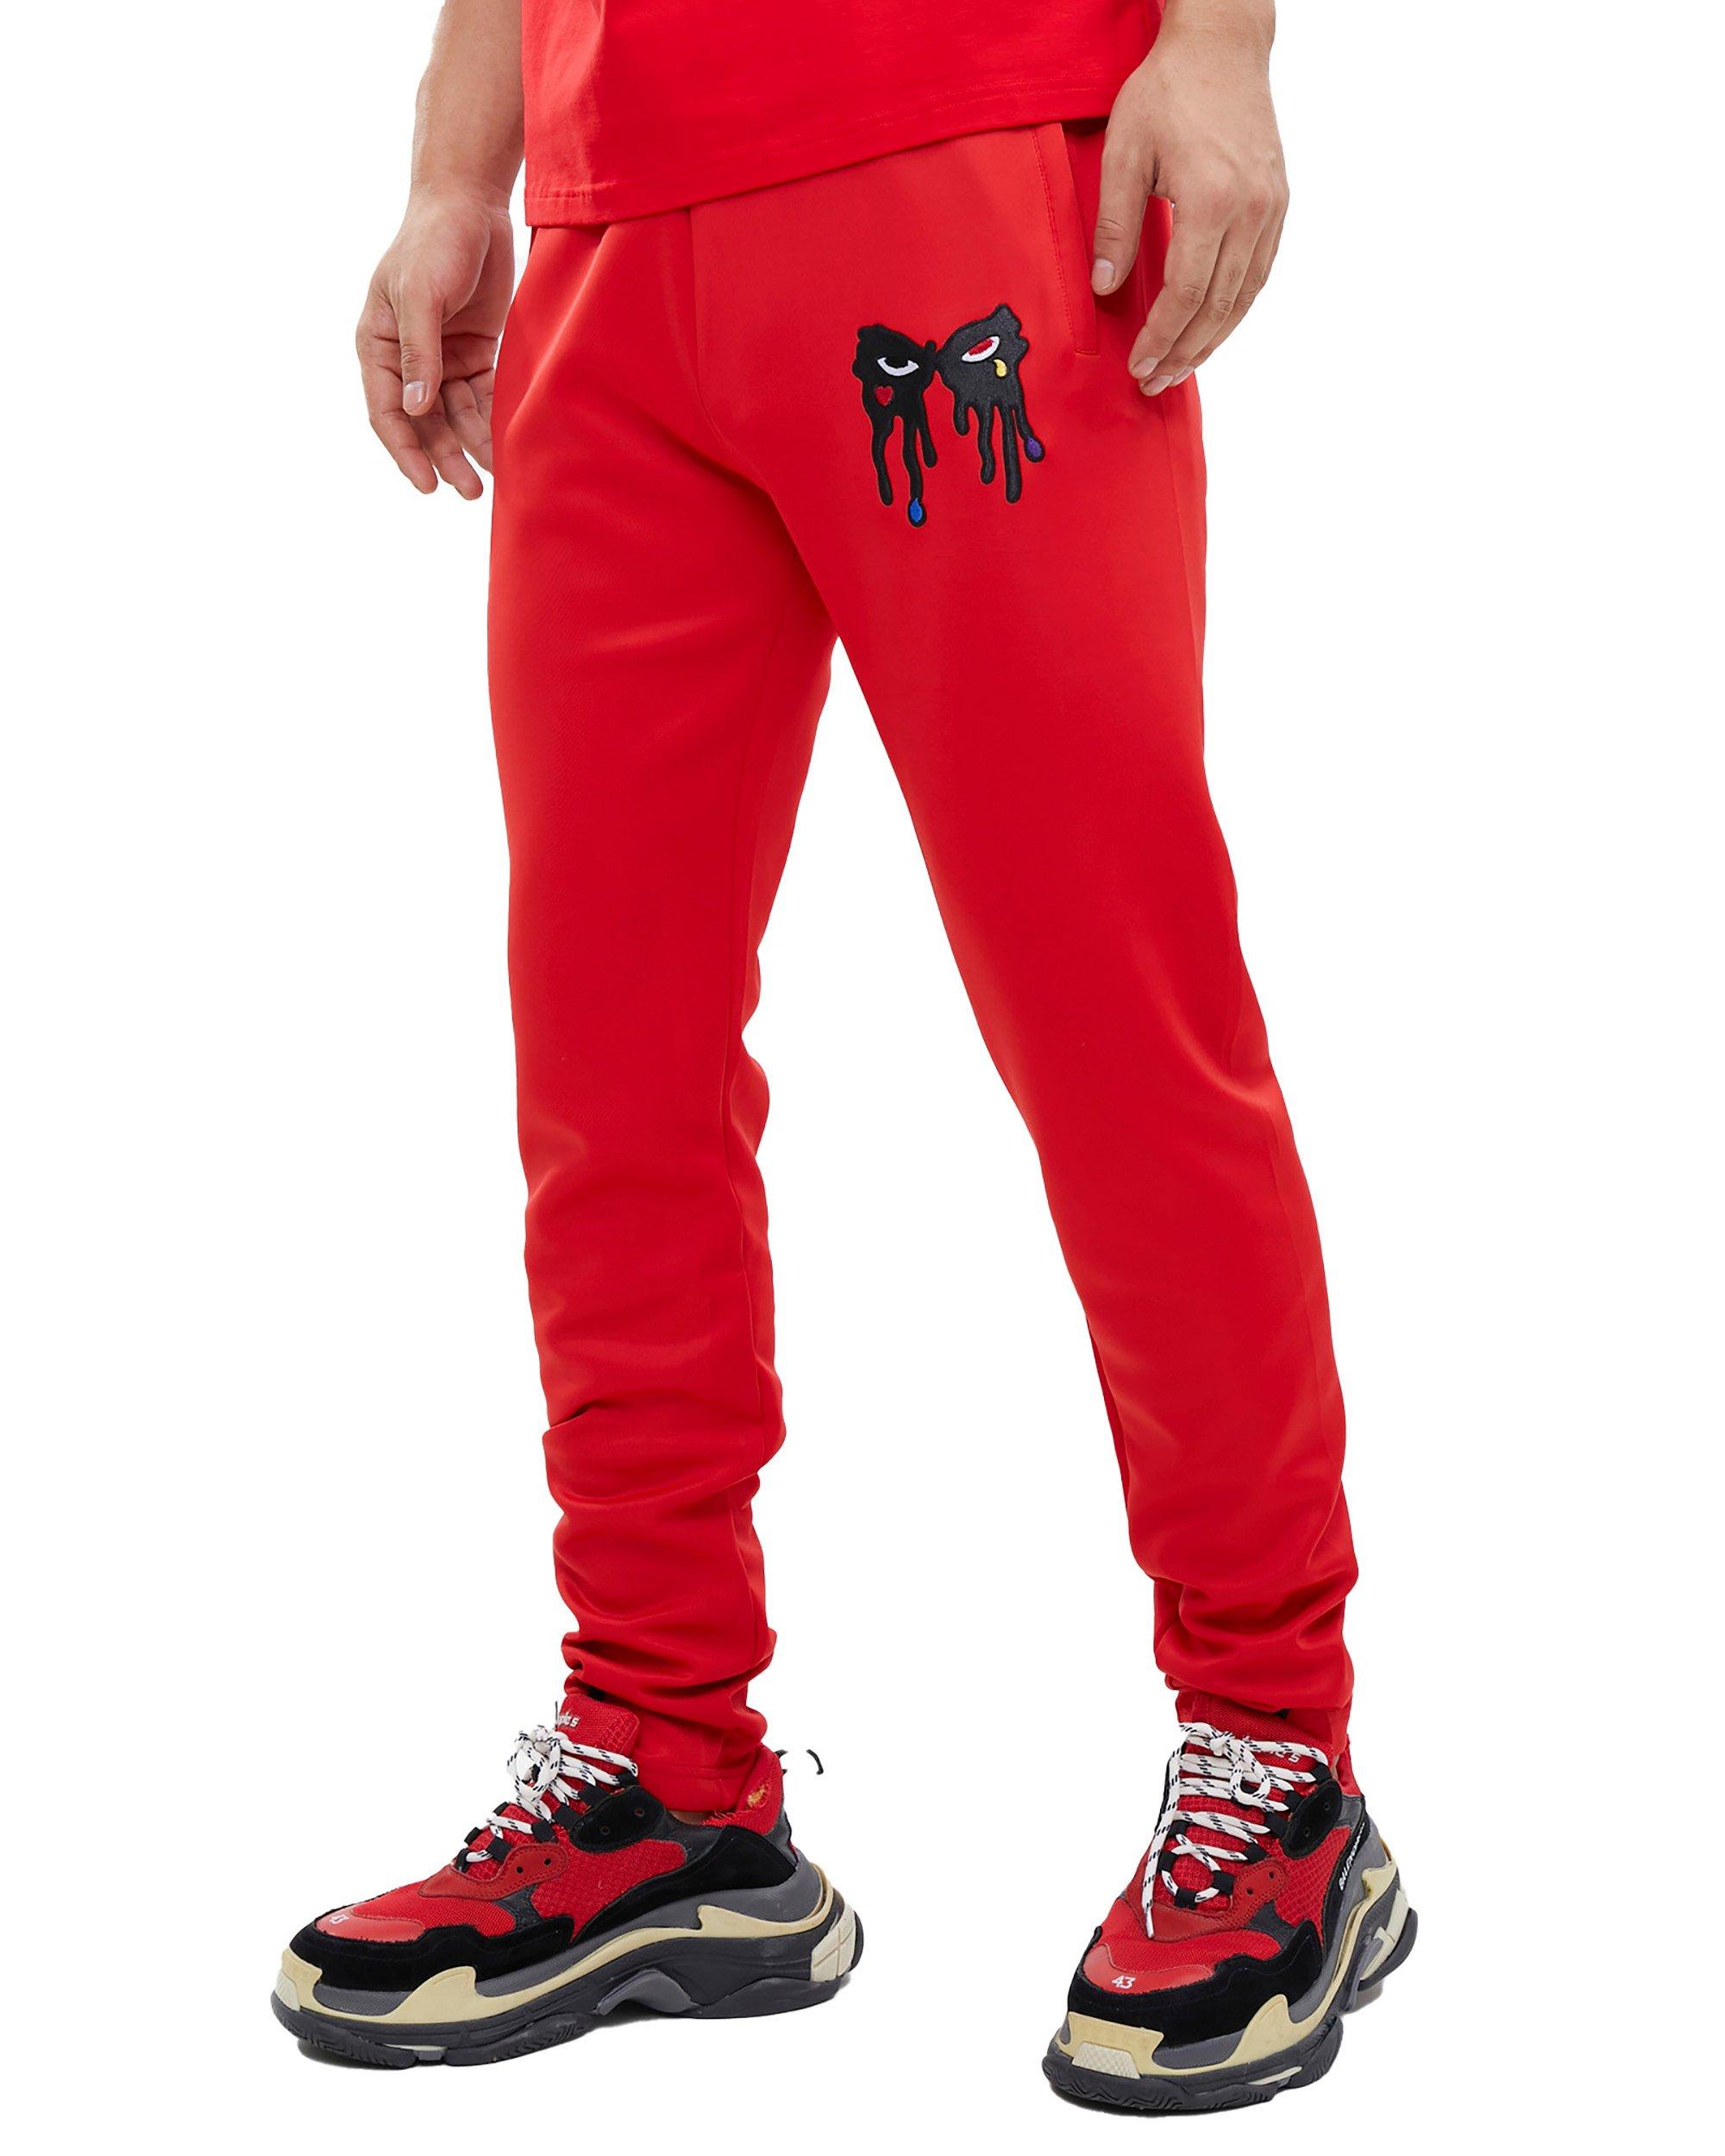 Black Pyramid Men's Mini Tear Drip Track Pants, Red, Size: Large, Polyester/Cotton